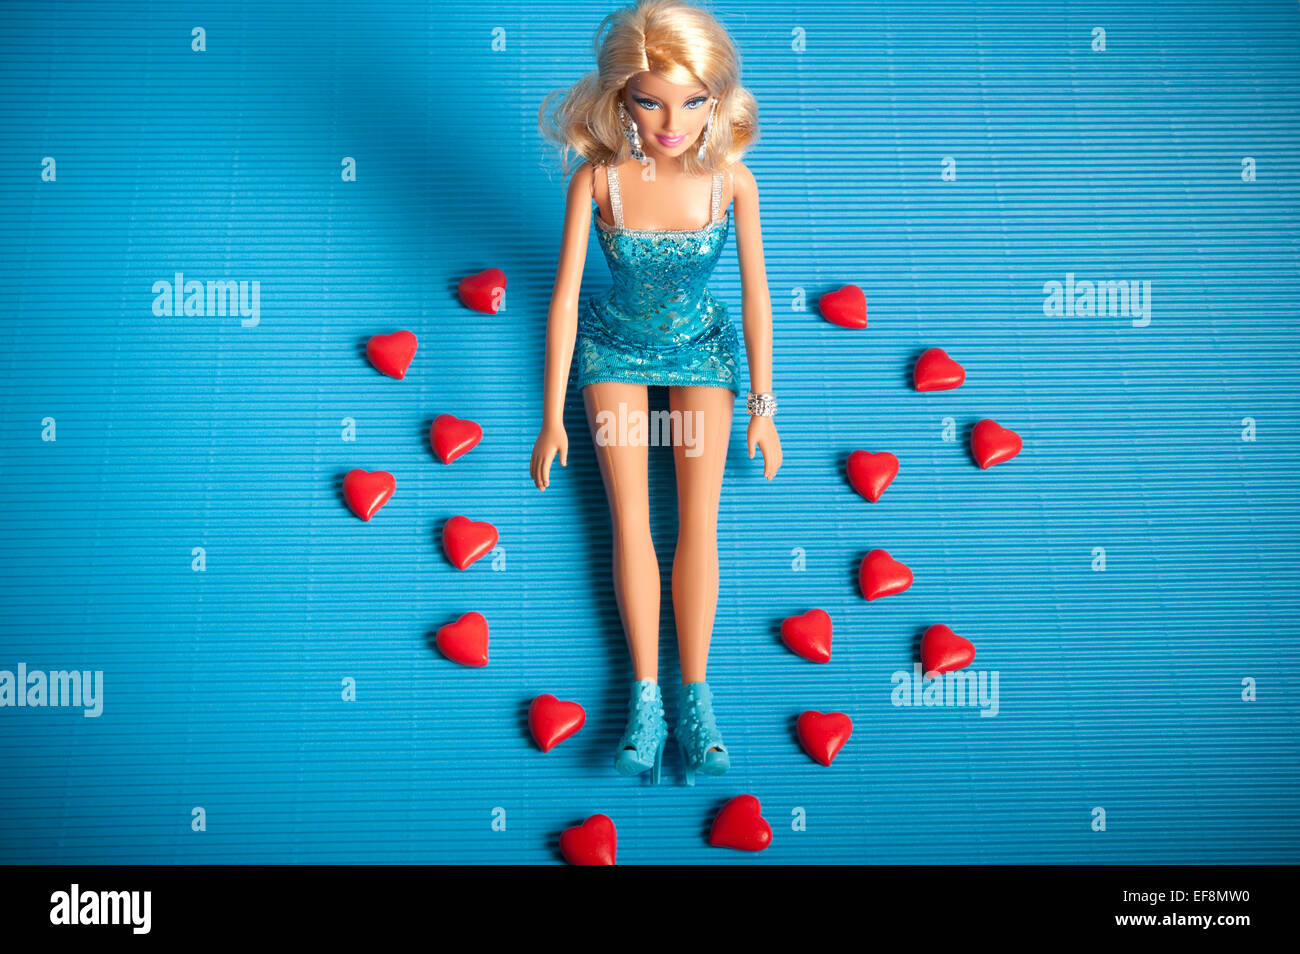 Barbie and Valentine hearts, I love Barbie concept Stock Photo - Alamy